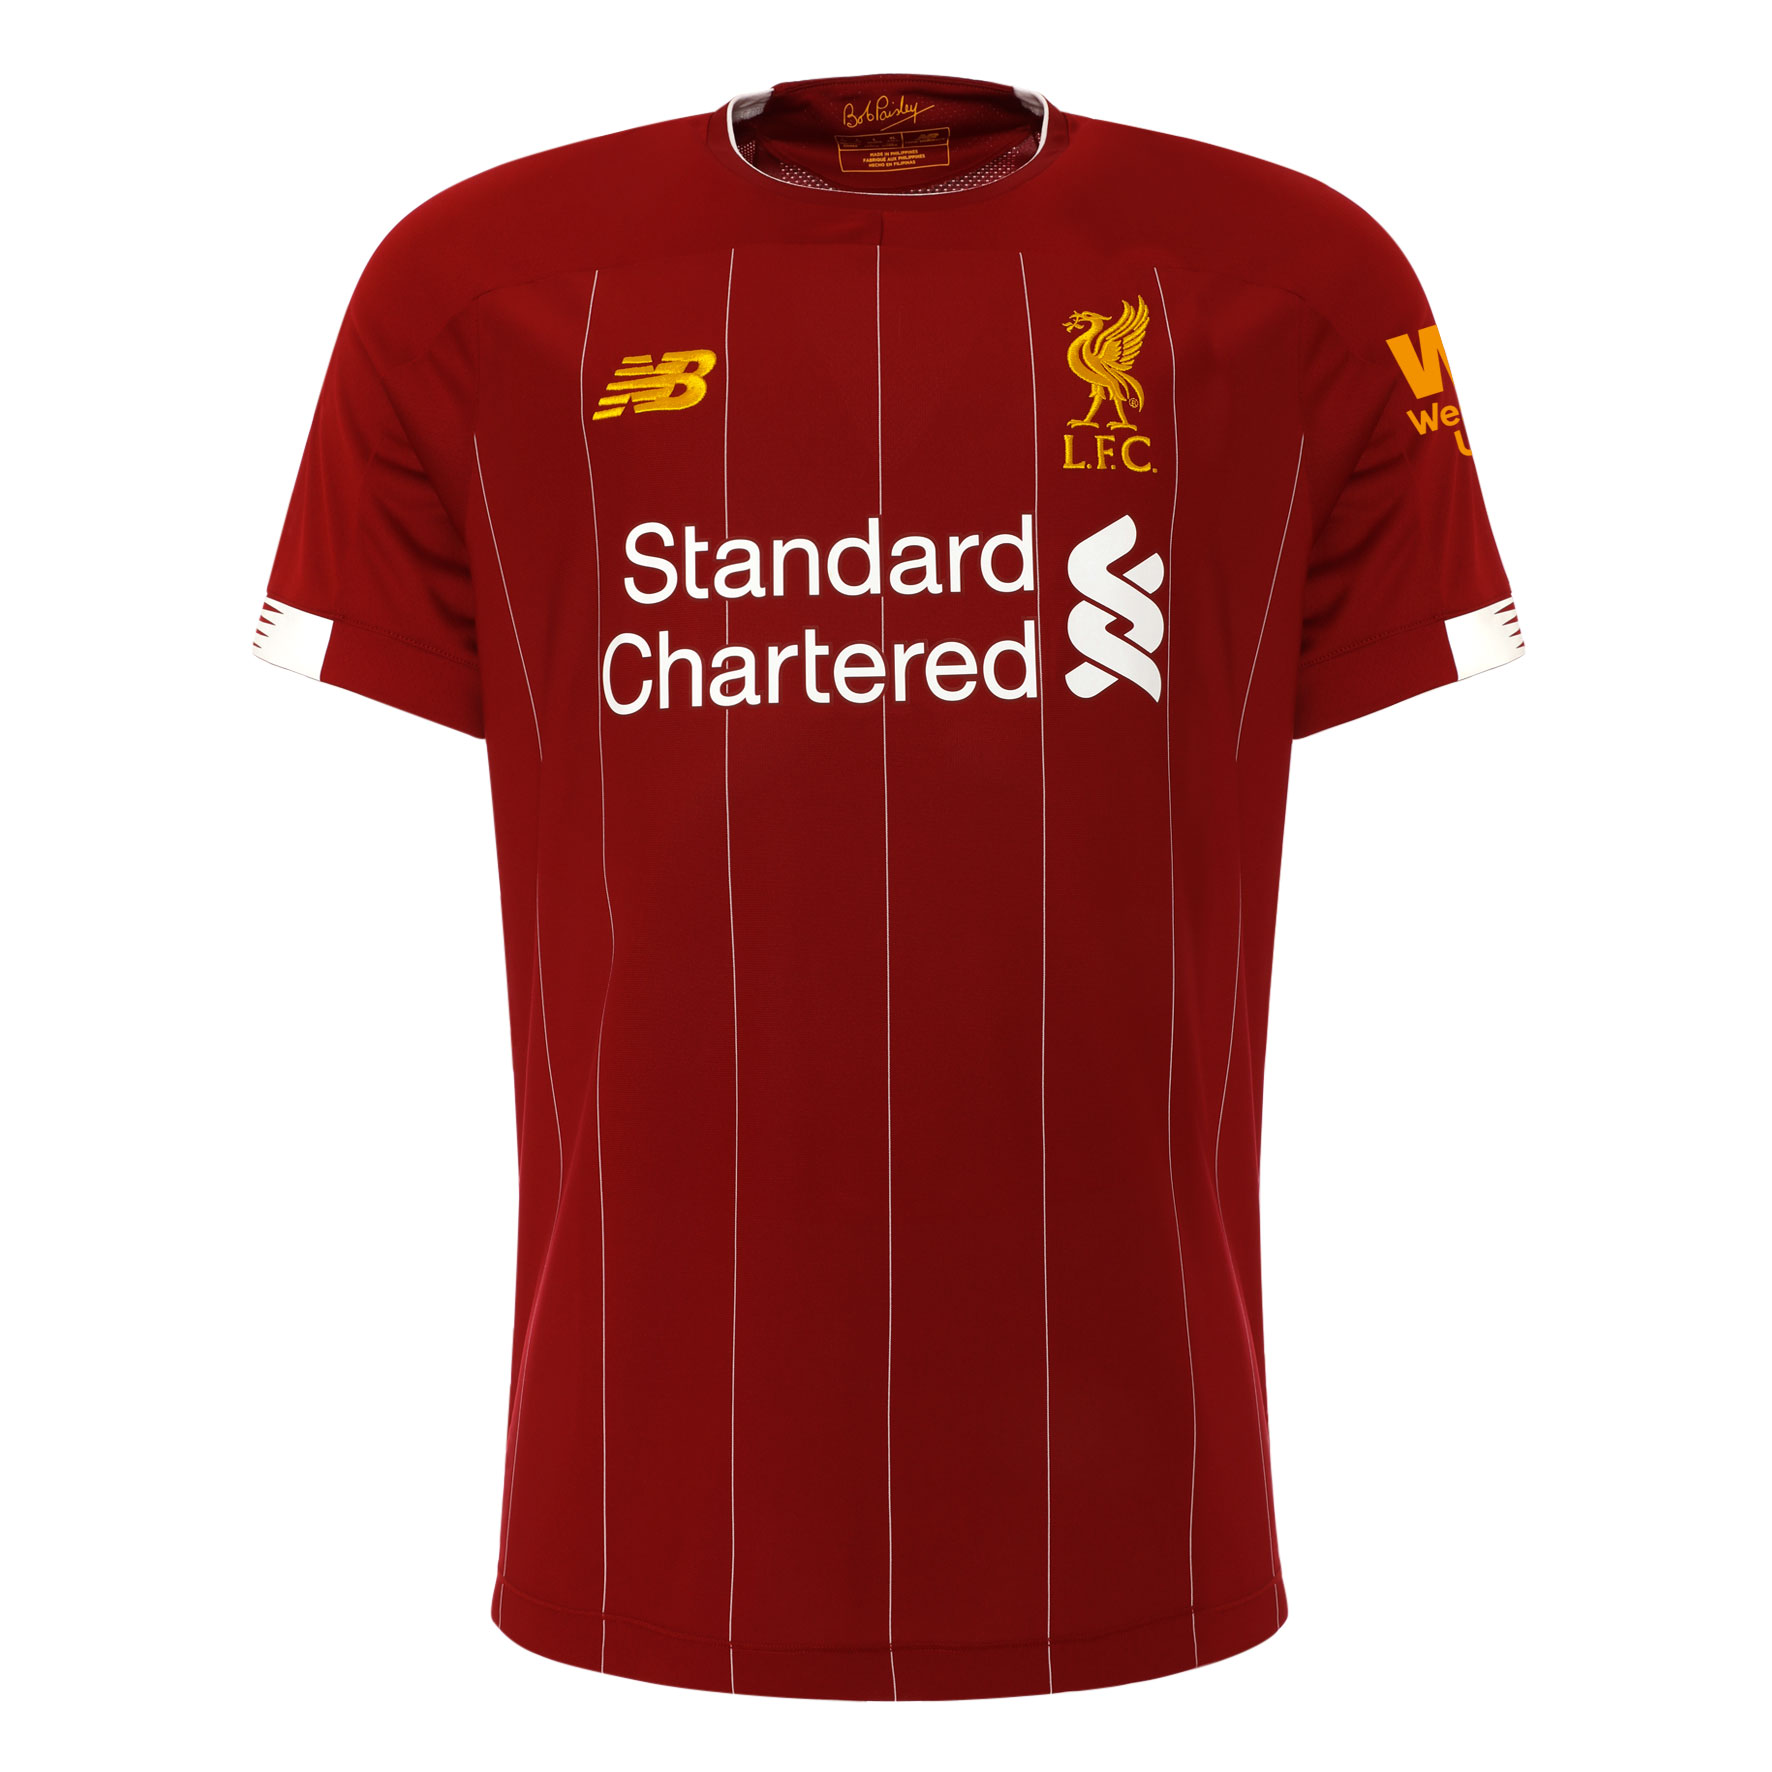 New Liverpool kit